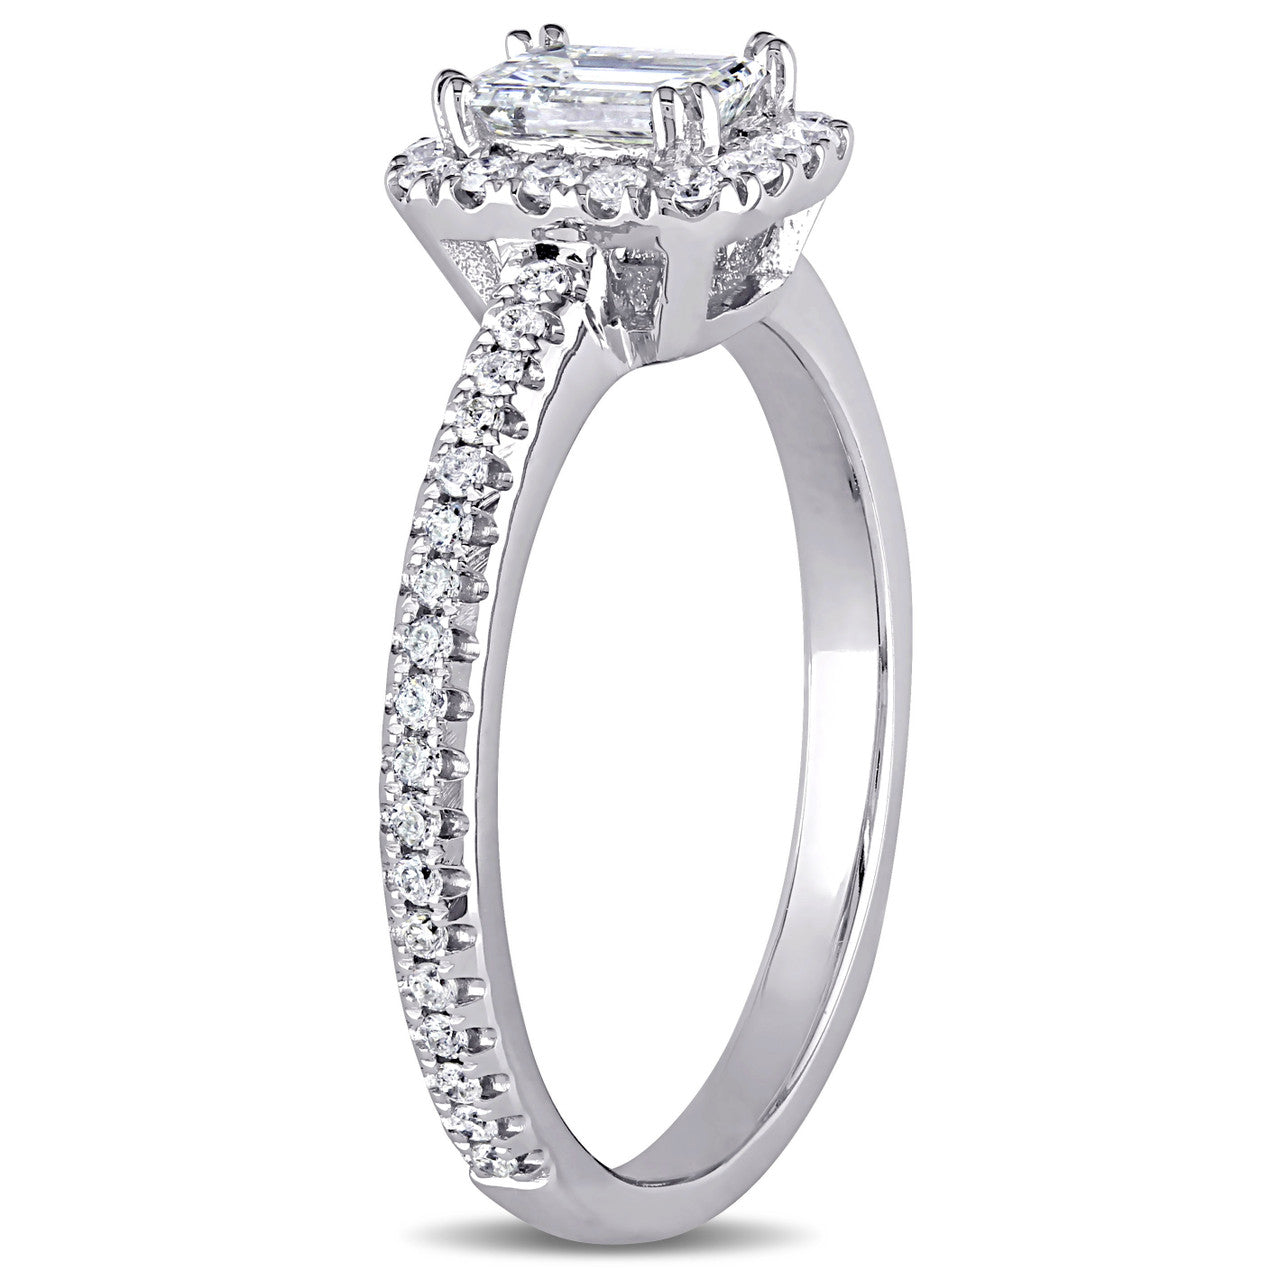 Ice Jewellery 7/8 CT Emerald Cut and Round Diamonds TW Ring in 14k White Gold - 75000004125 | Ice Jewellery Australia